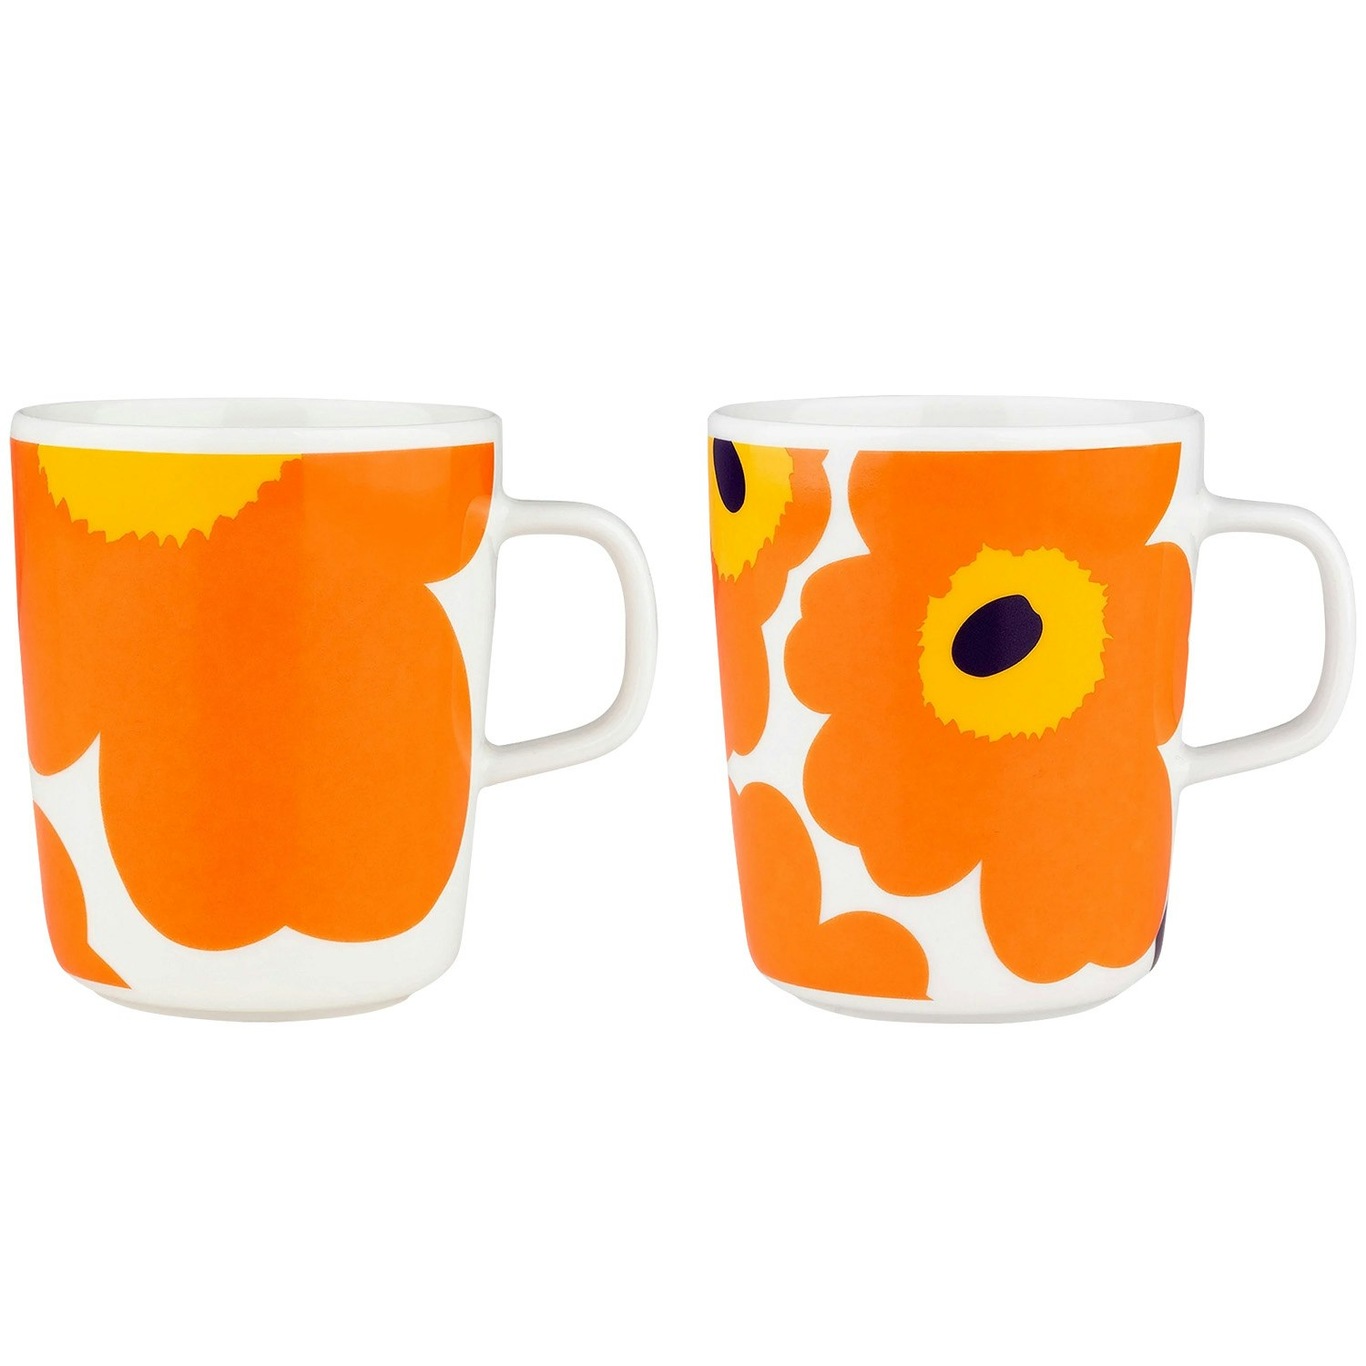 Iso Unikko Mug 25 cl 2-pack, White / Orange / Yellow